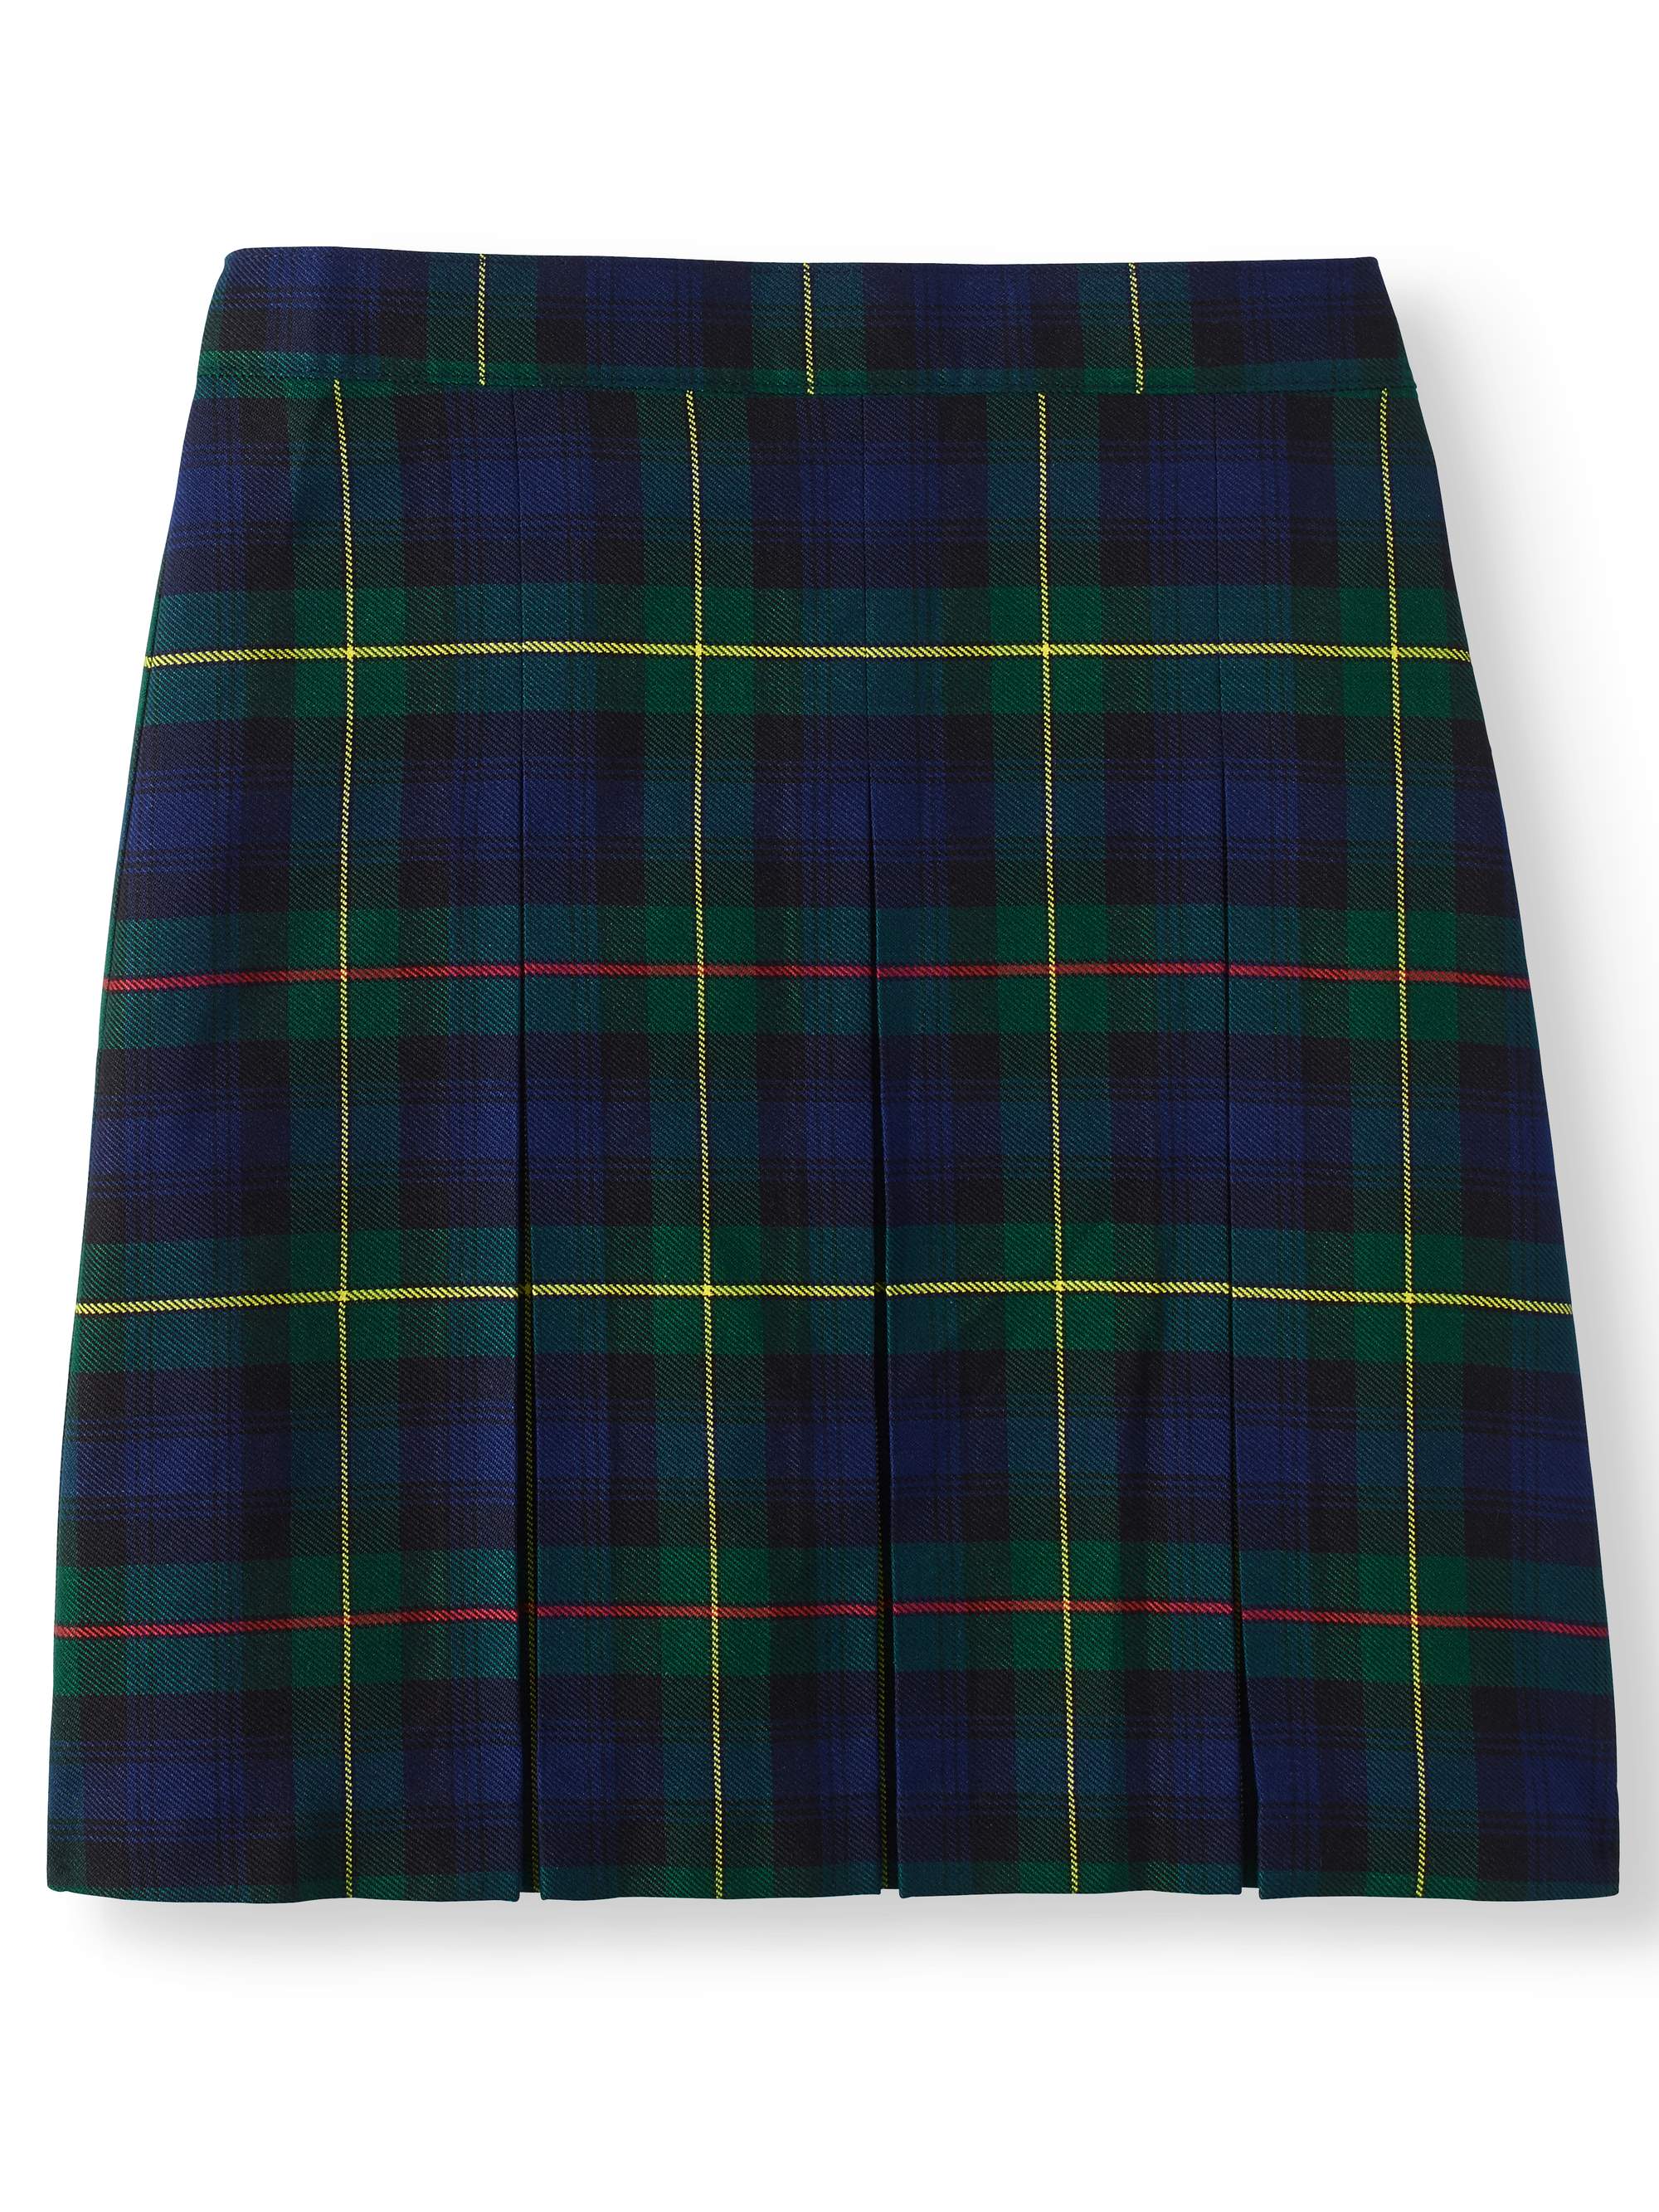 Wonder Nation Girls School Uniform Plaid Parochial Skirt, Sizes 4-16 - image 1 of 6